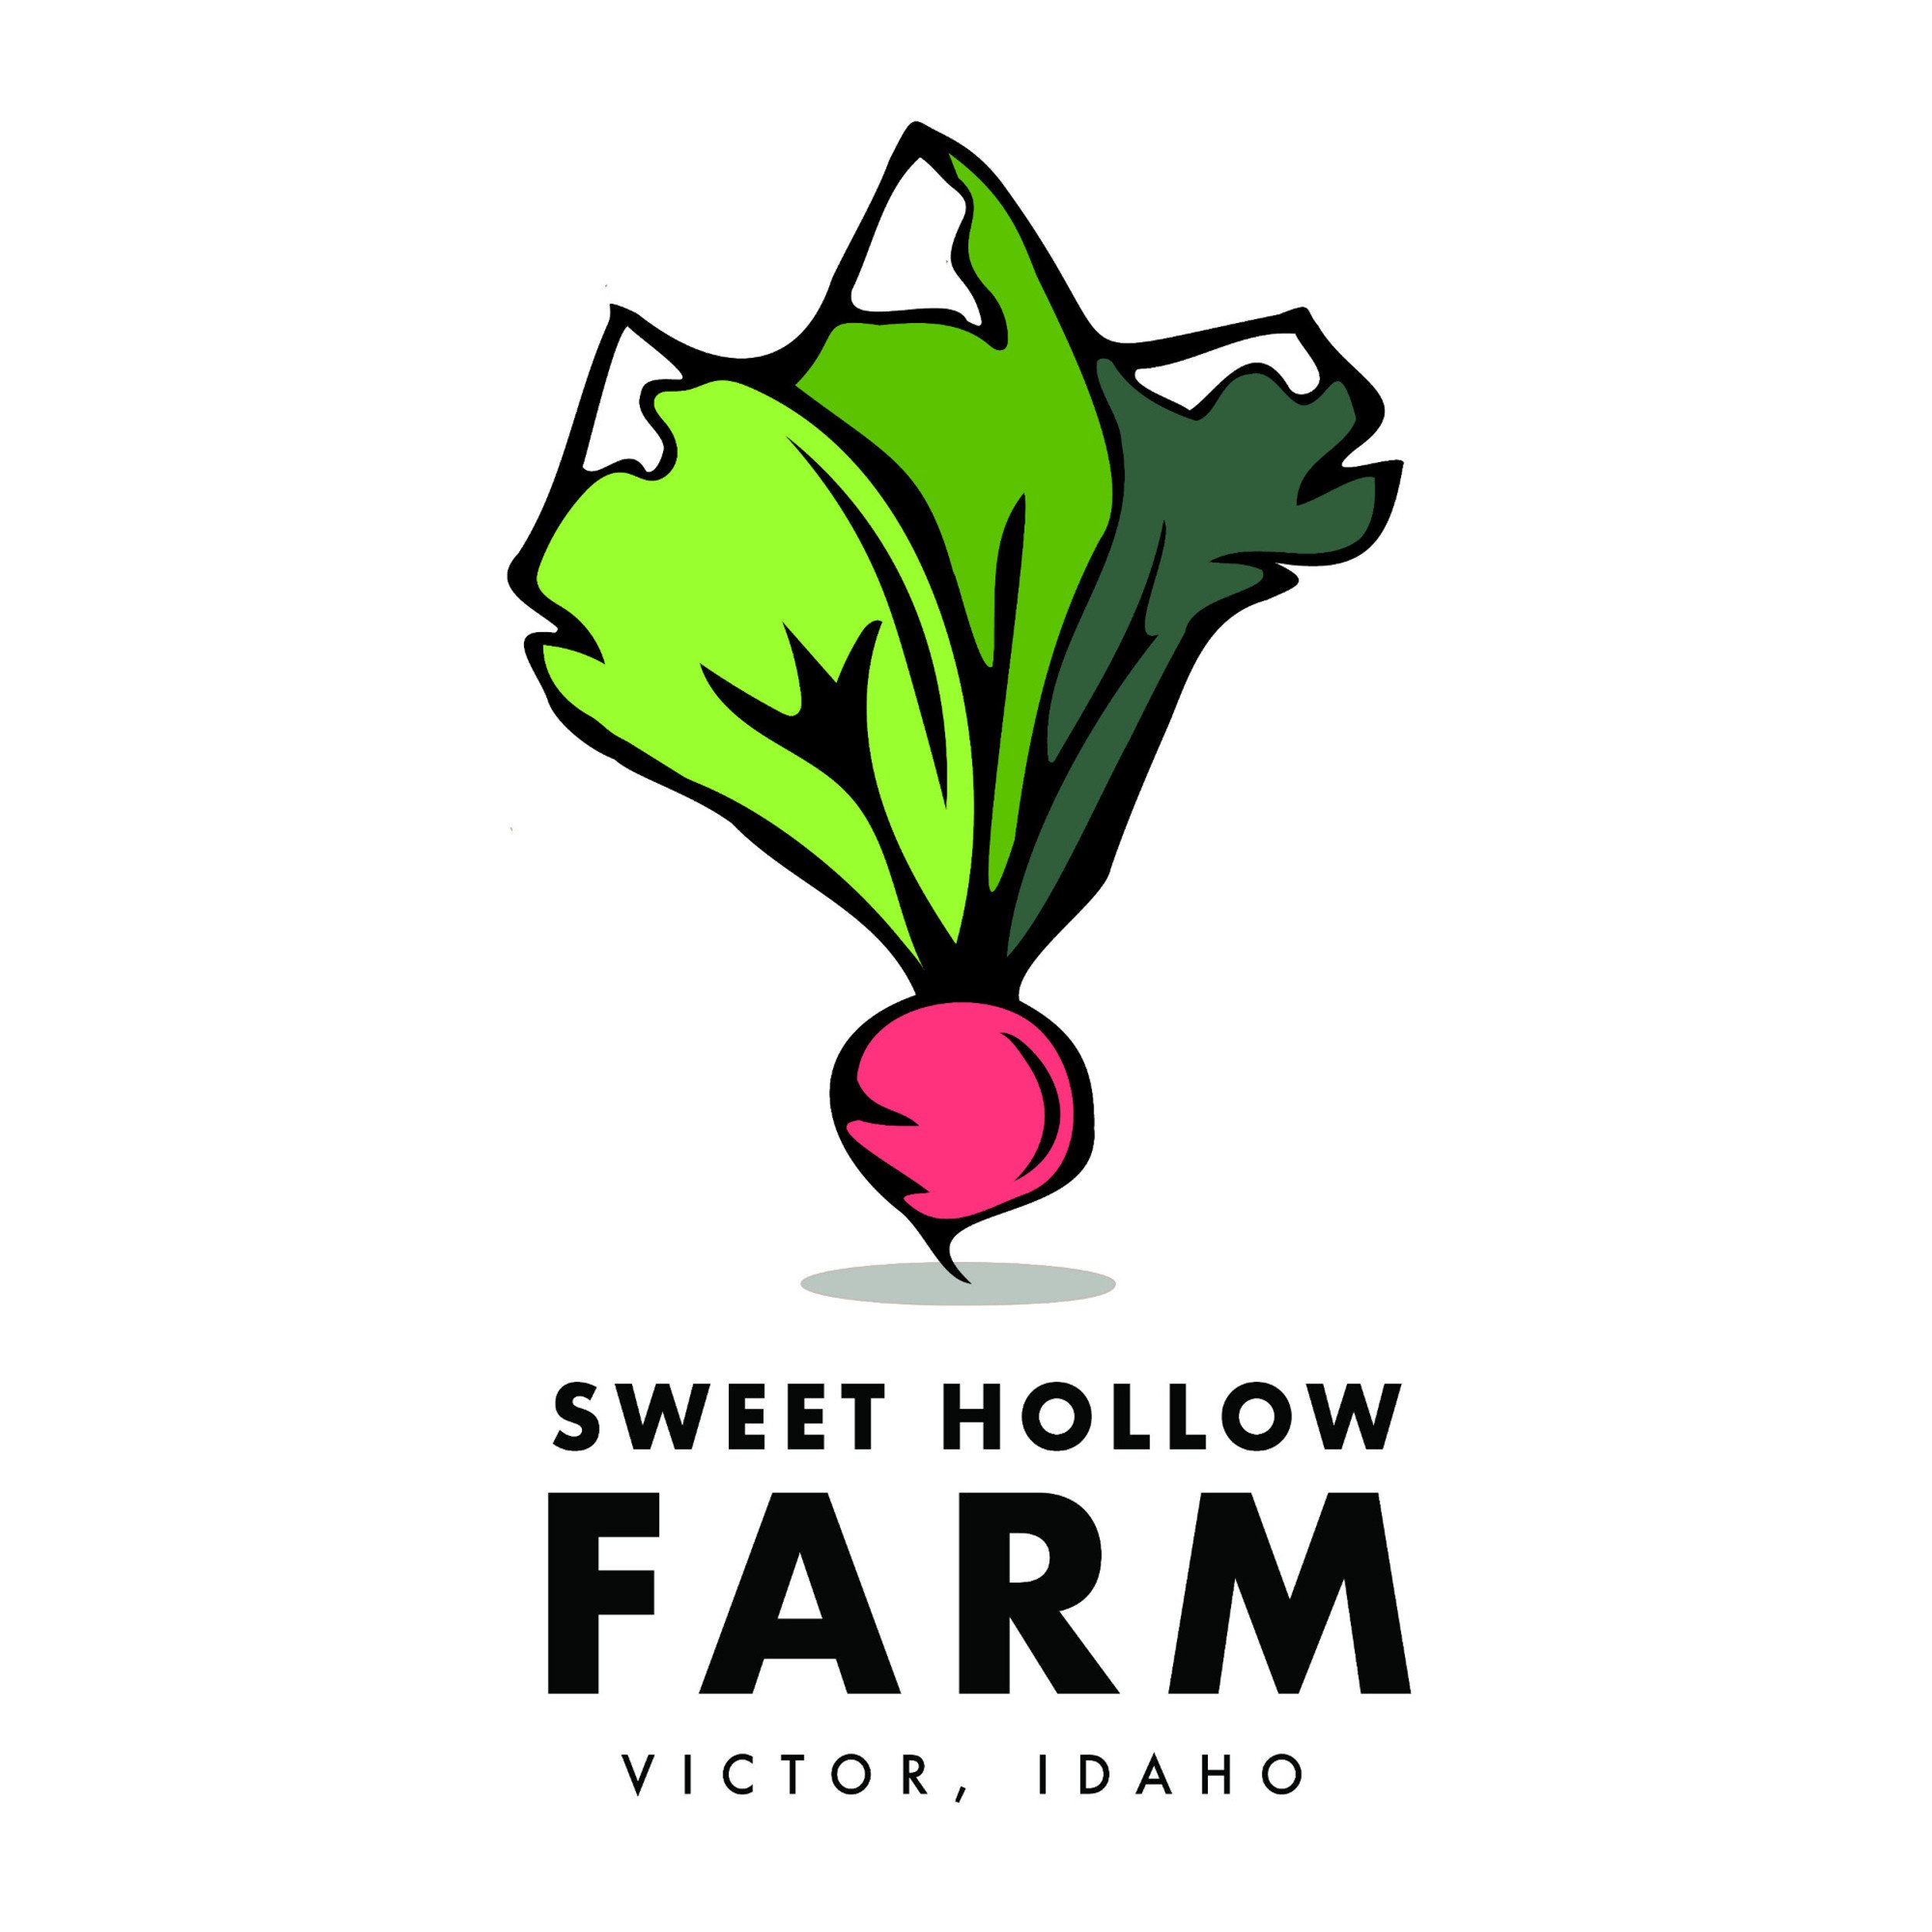 Sweet Hollow Farm logo.jpg